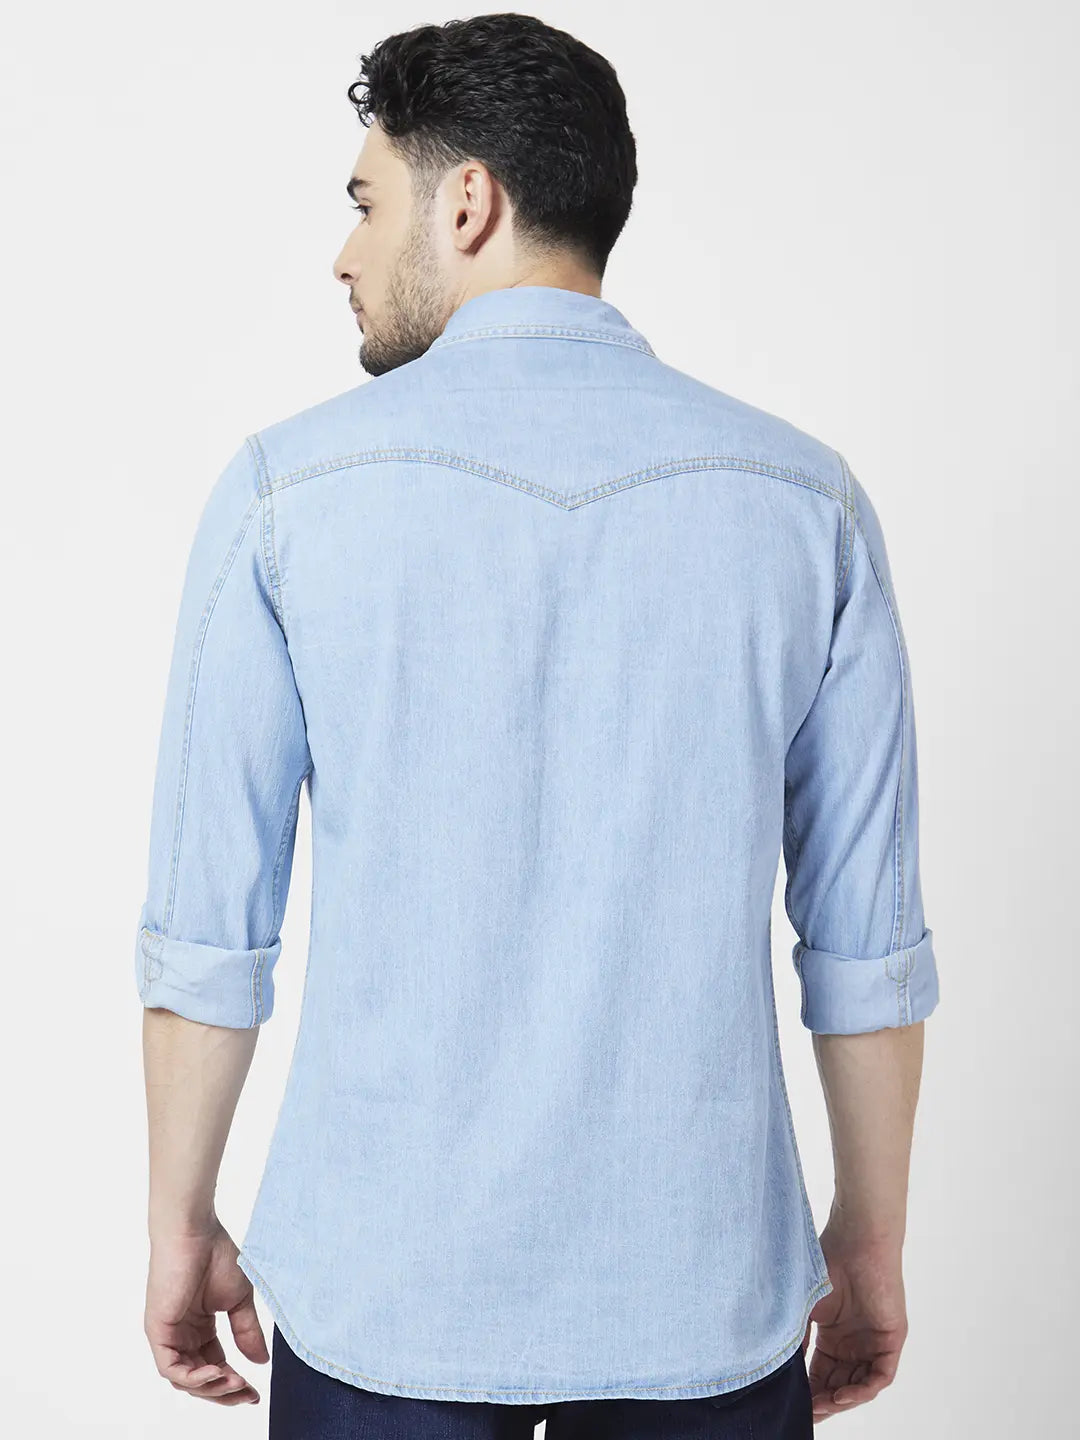 Mens Denim Shirts Casual Slim Fit Denim Shirt Jeans Long Sleeve Tops Button  Tops | eBay